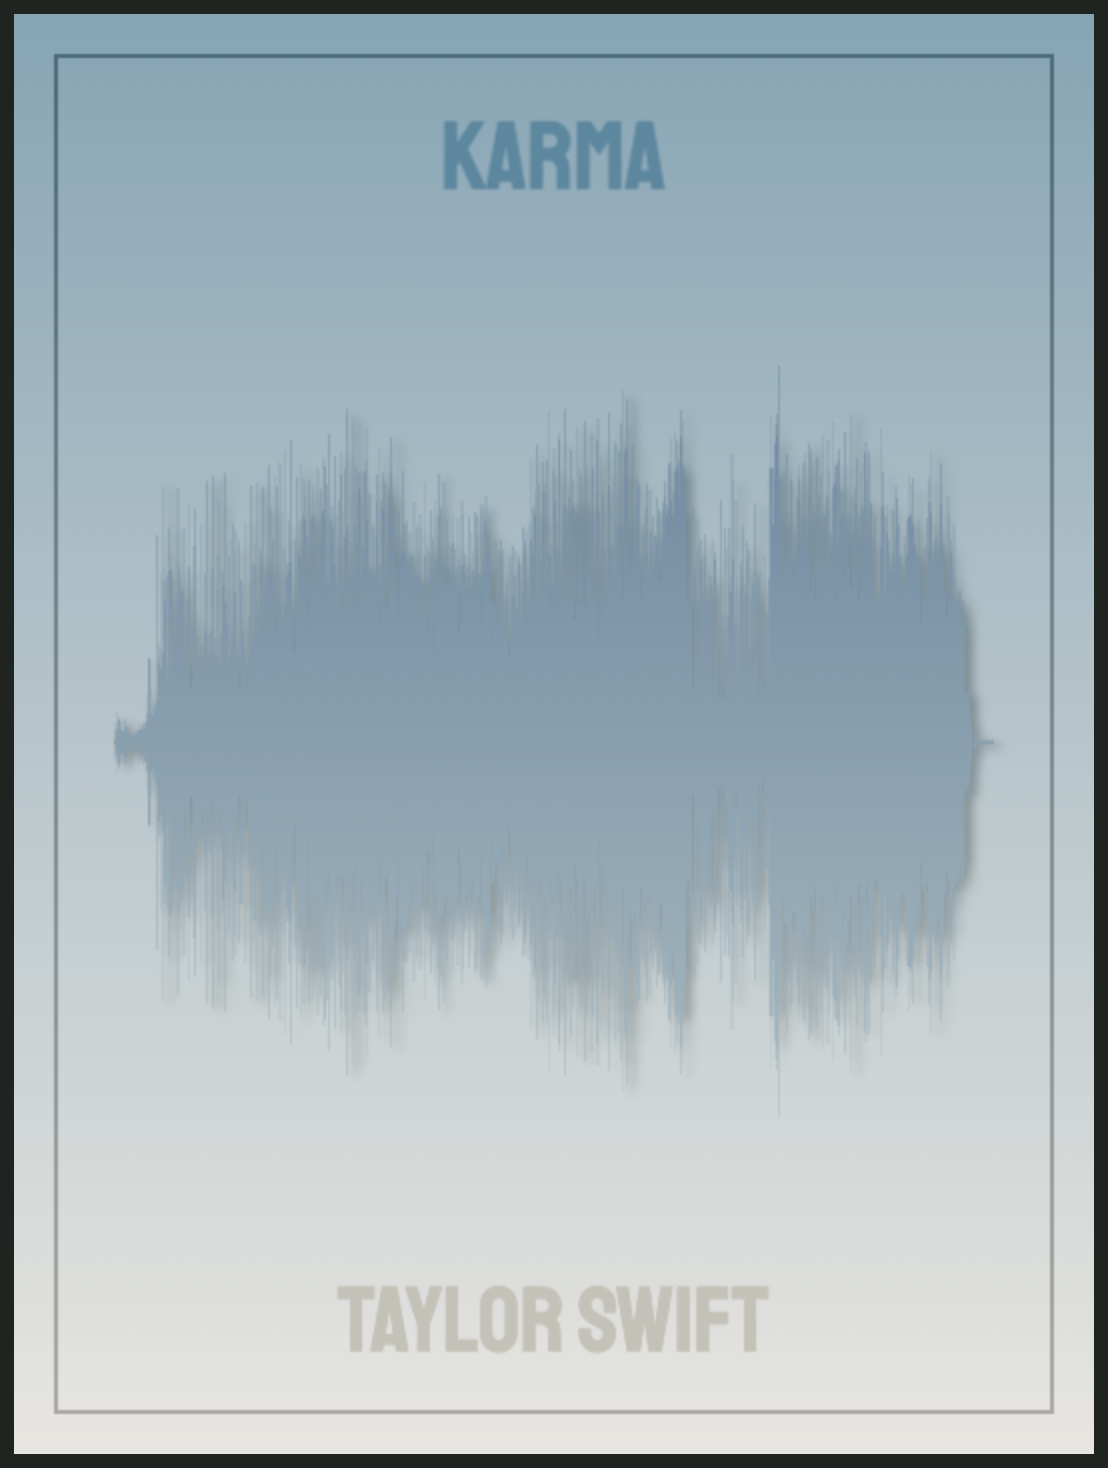 Taylor Swift 'Karma' Soundwave Poster - Blue Soundwave on Off-White to Blue Gradient Background